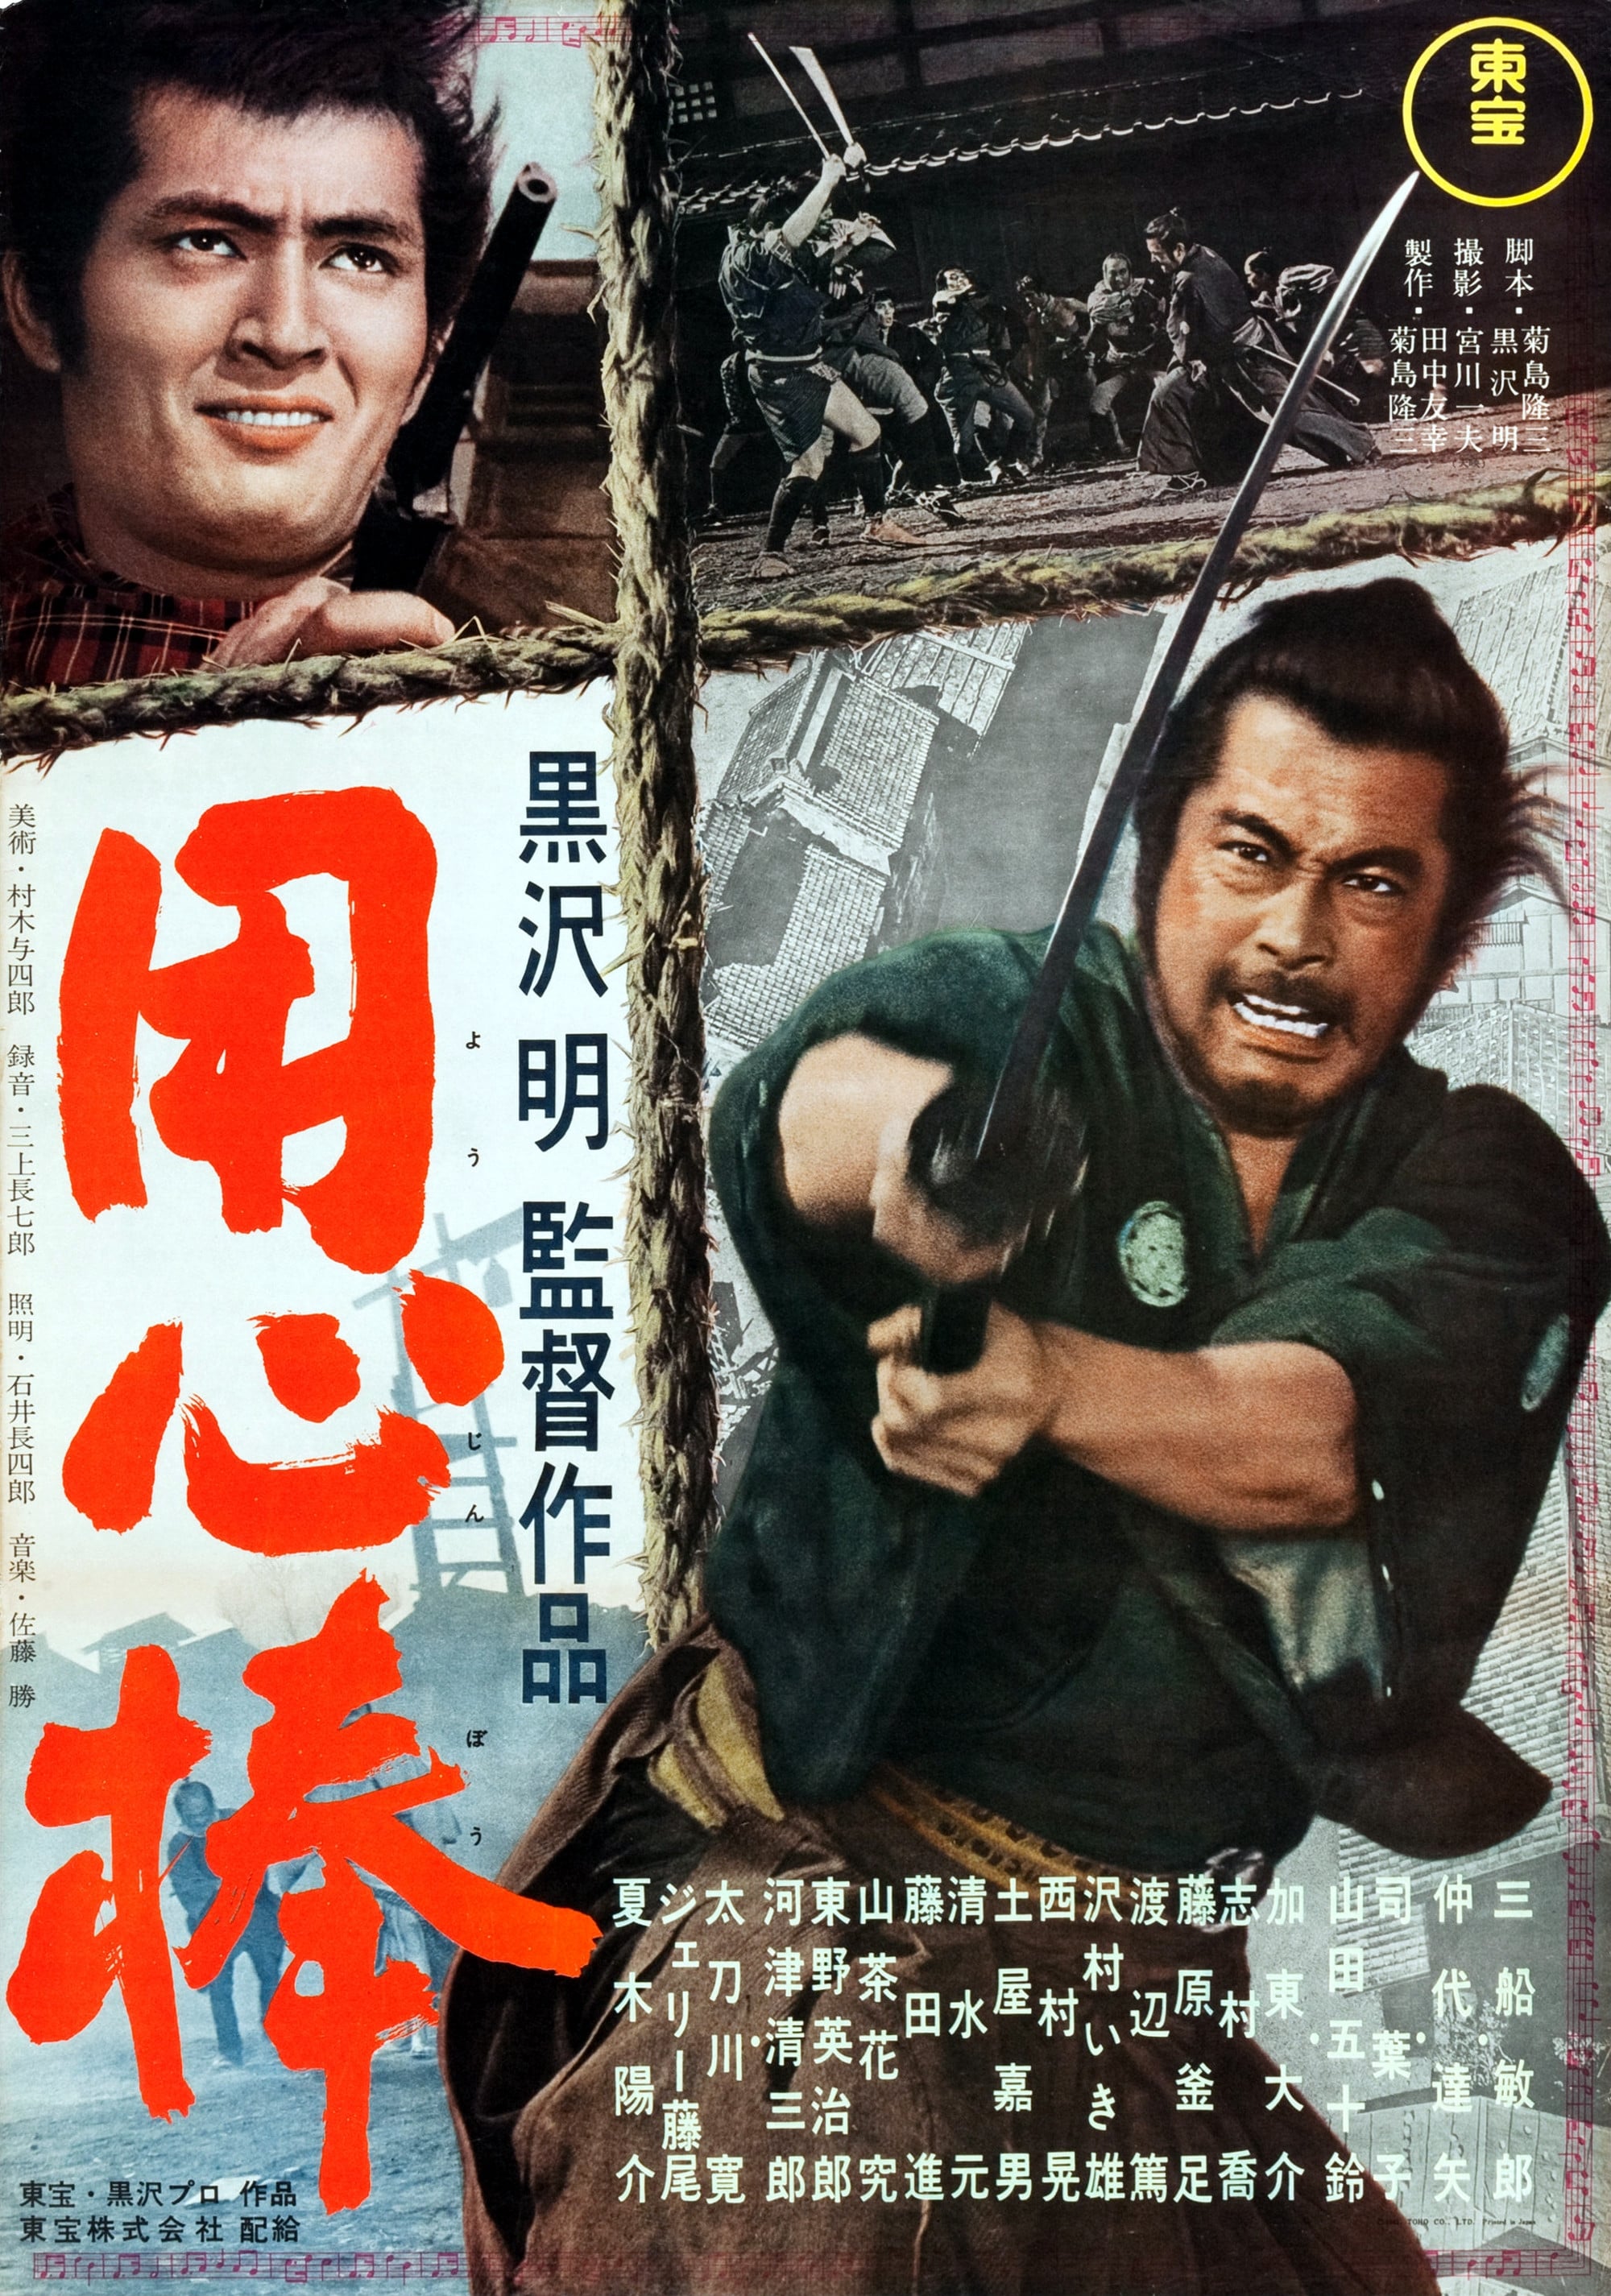 cartaz do filme Yojimbo